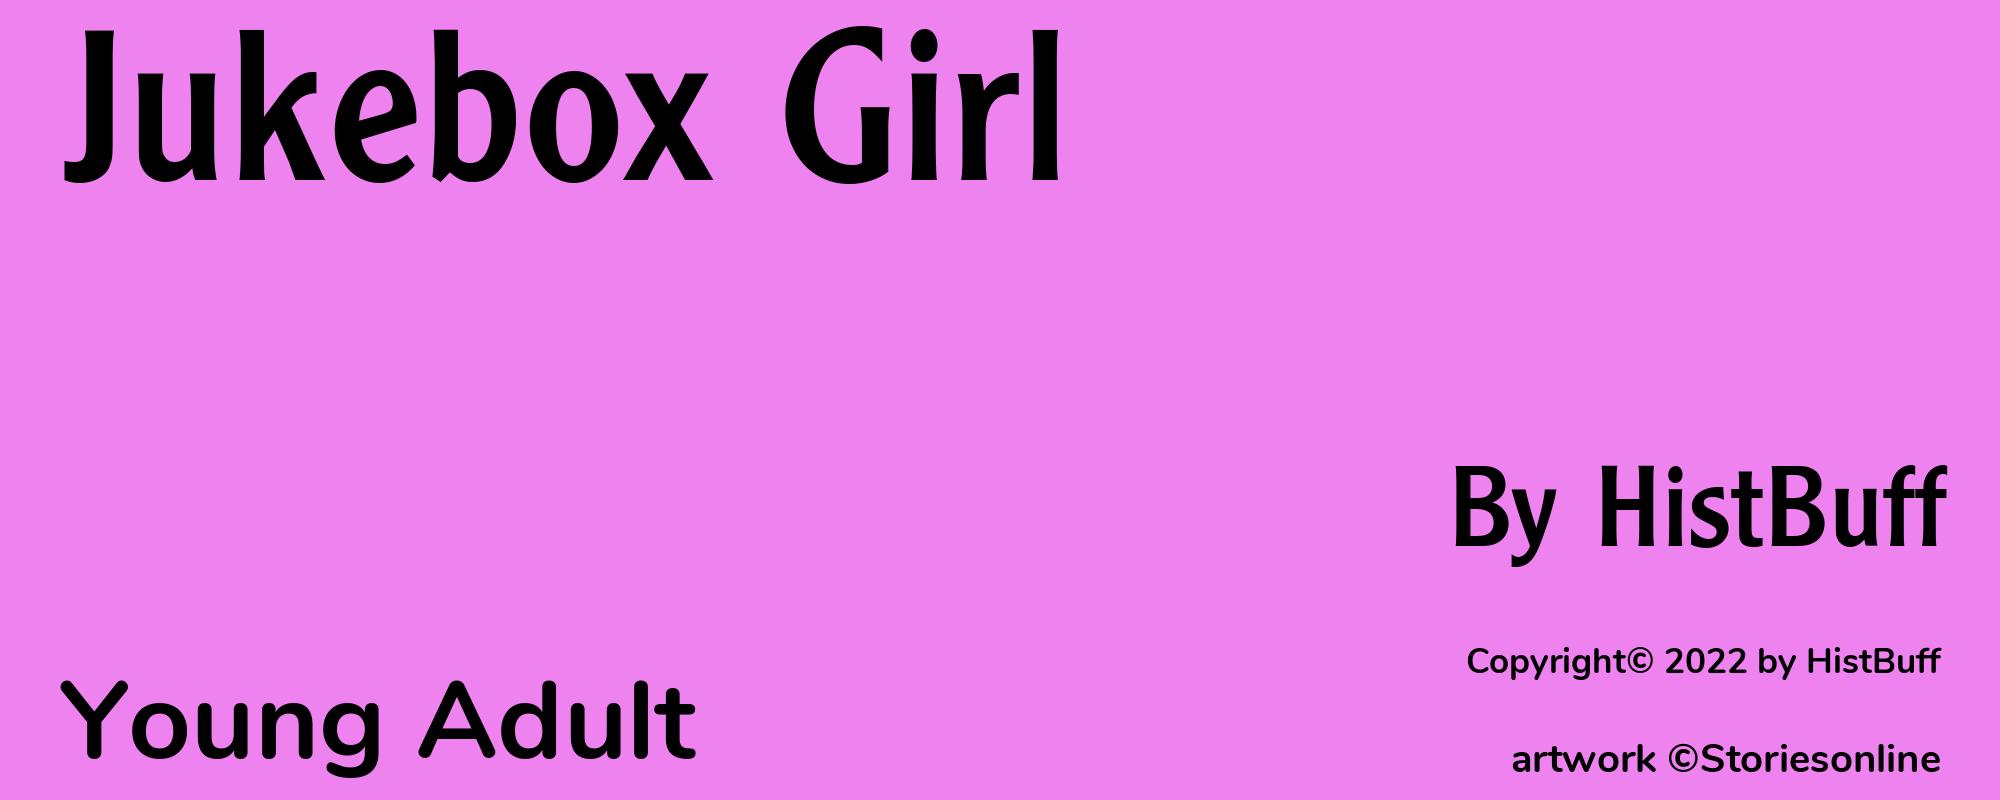 Jukebox Girl - Cover